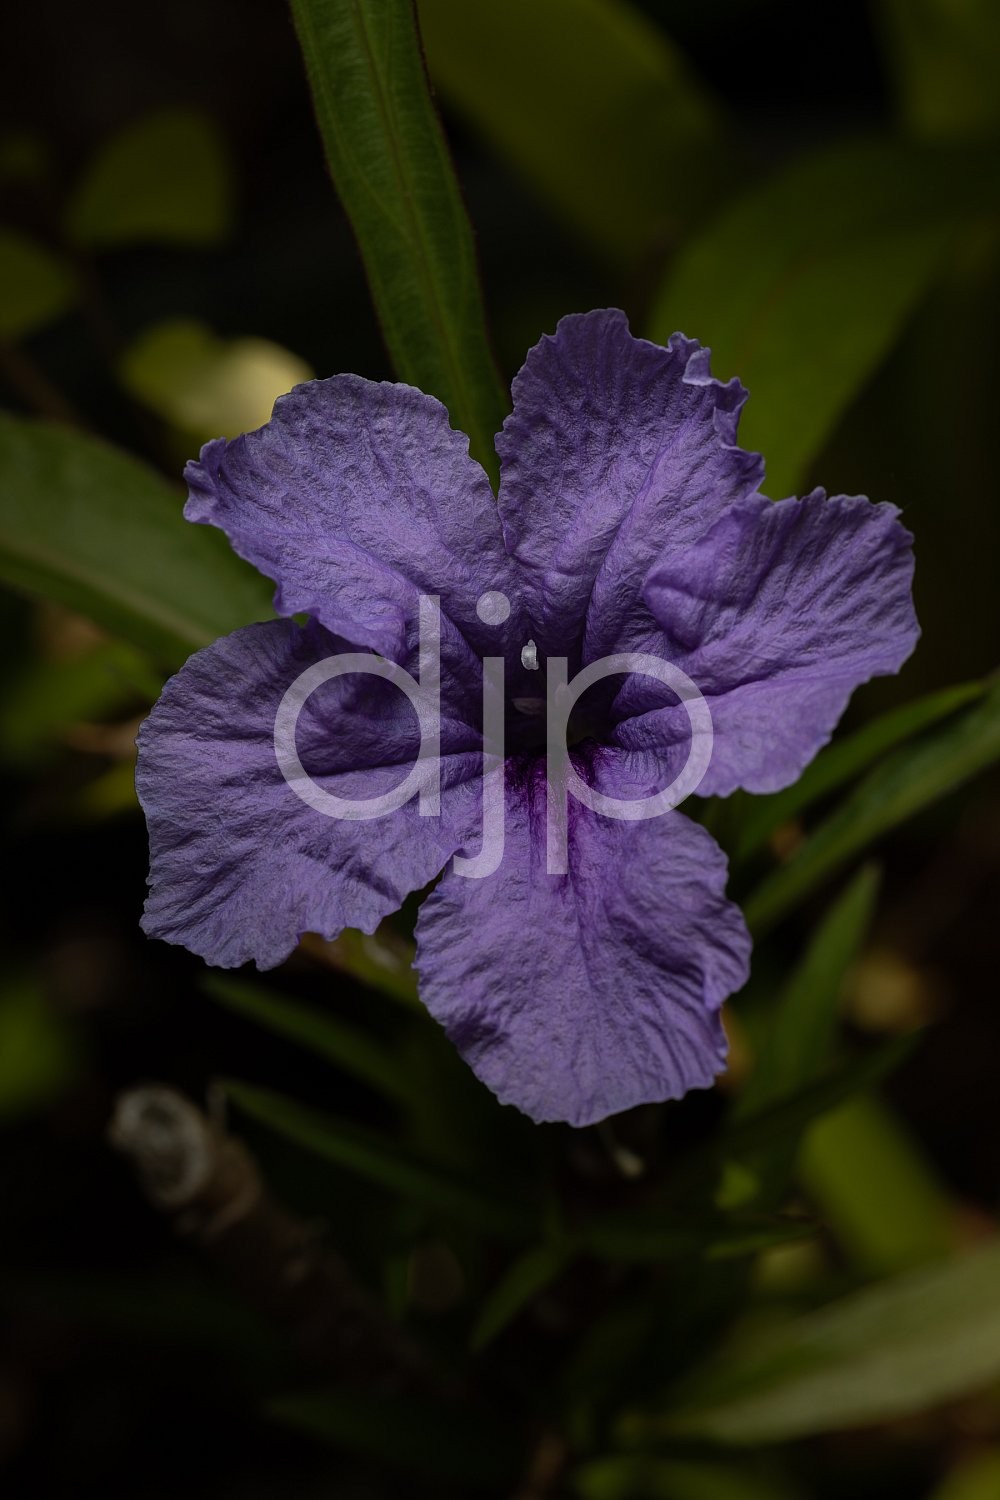 Sugar Land, djonesphoto, excursions with djp, flower, green, macro, personal, purple, quarantine, D Jones Photography